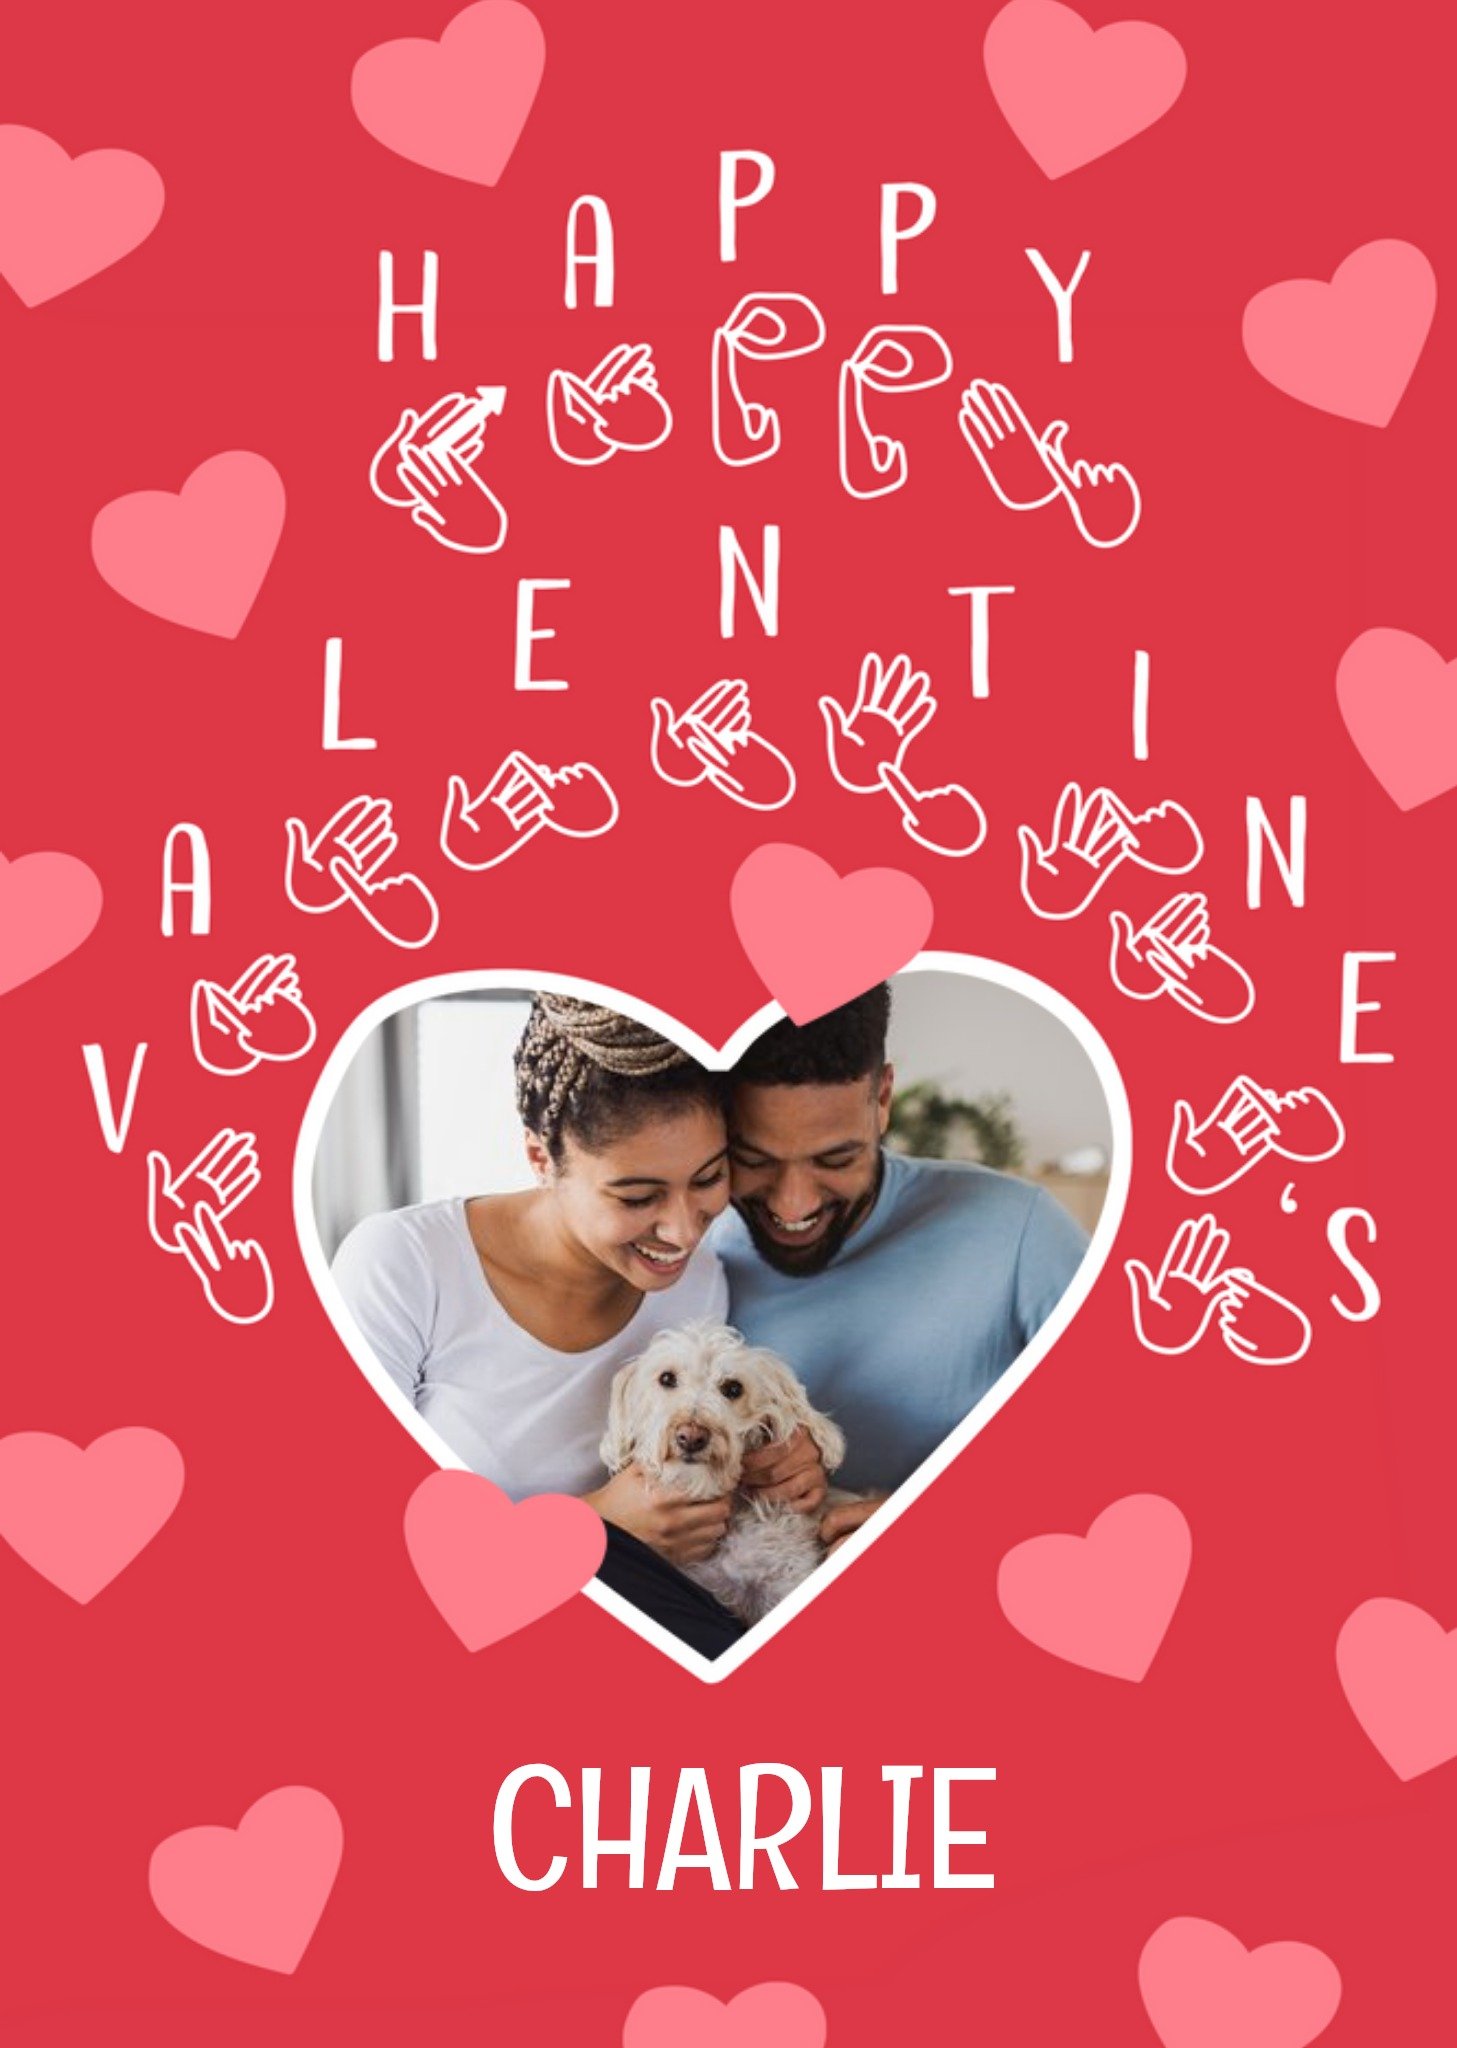 Moonpig Typography With Sign Language Symbols Photo Upload Valentine's Day Card Ecard